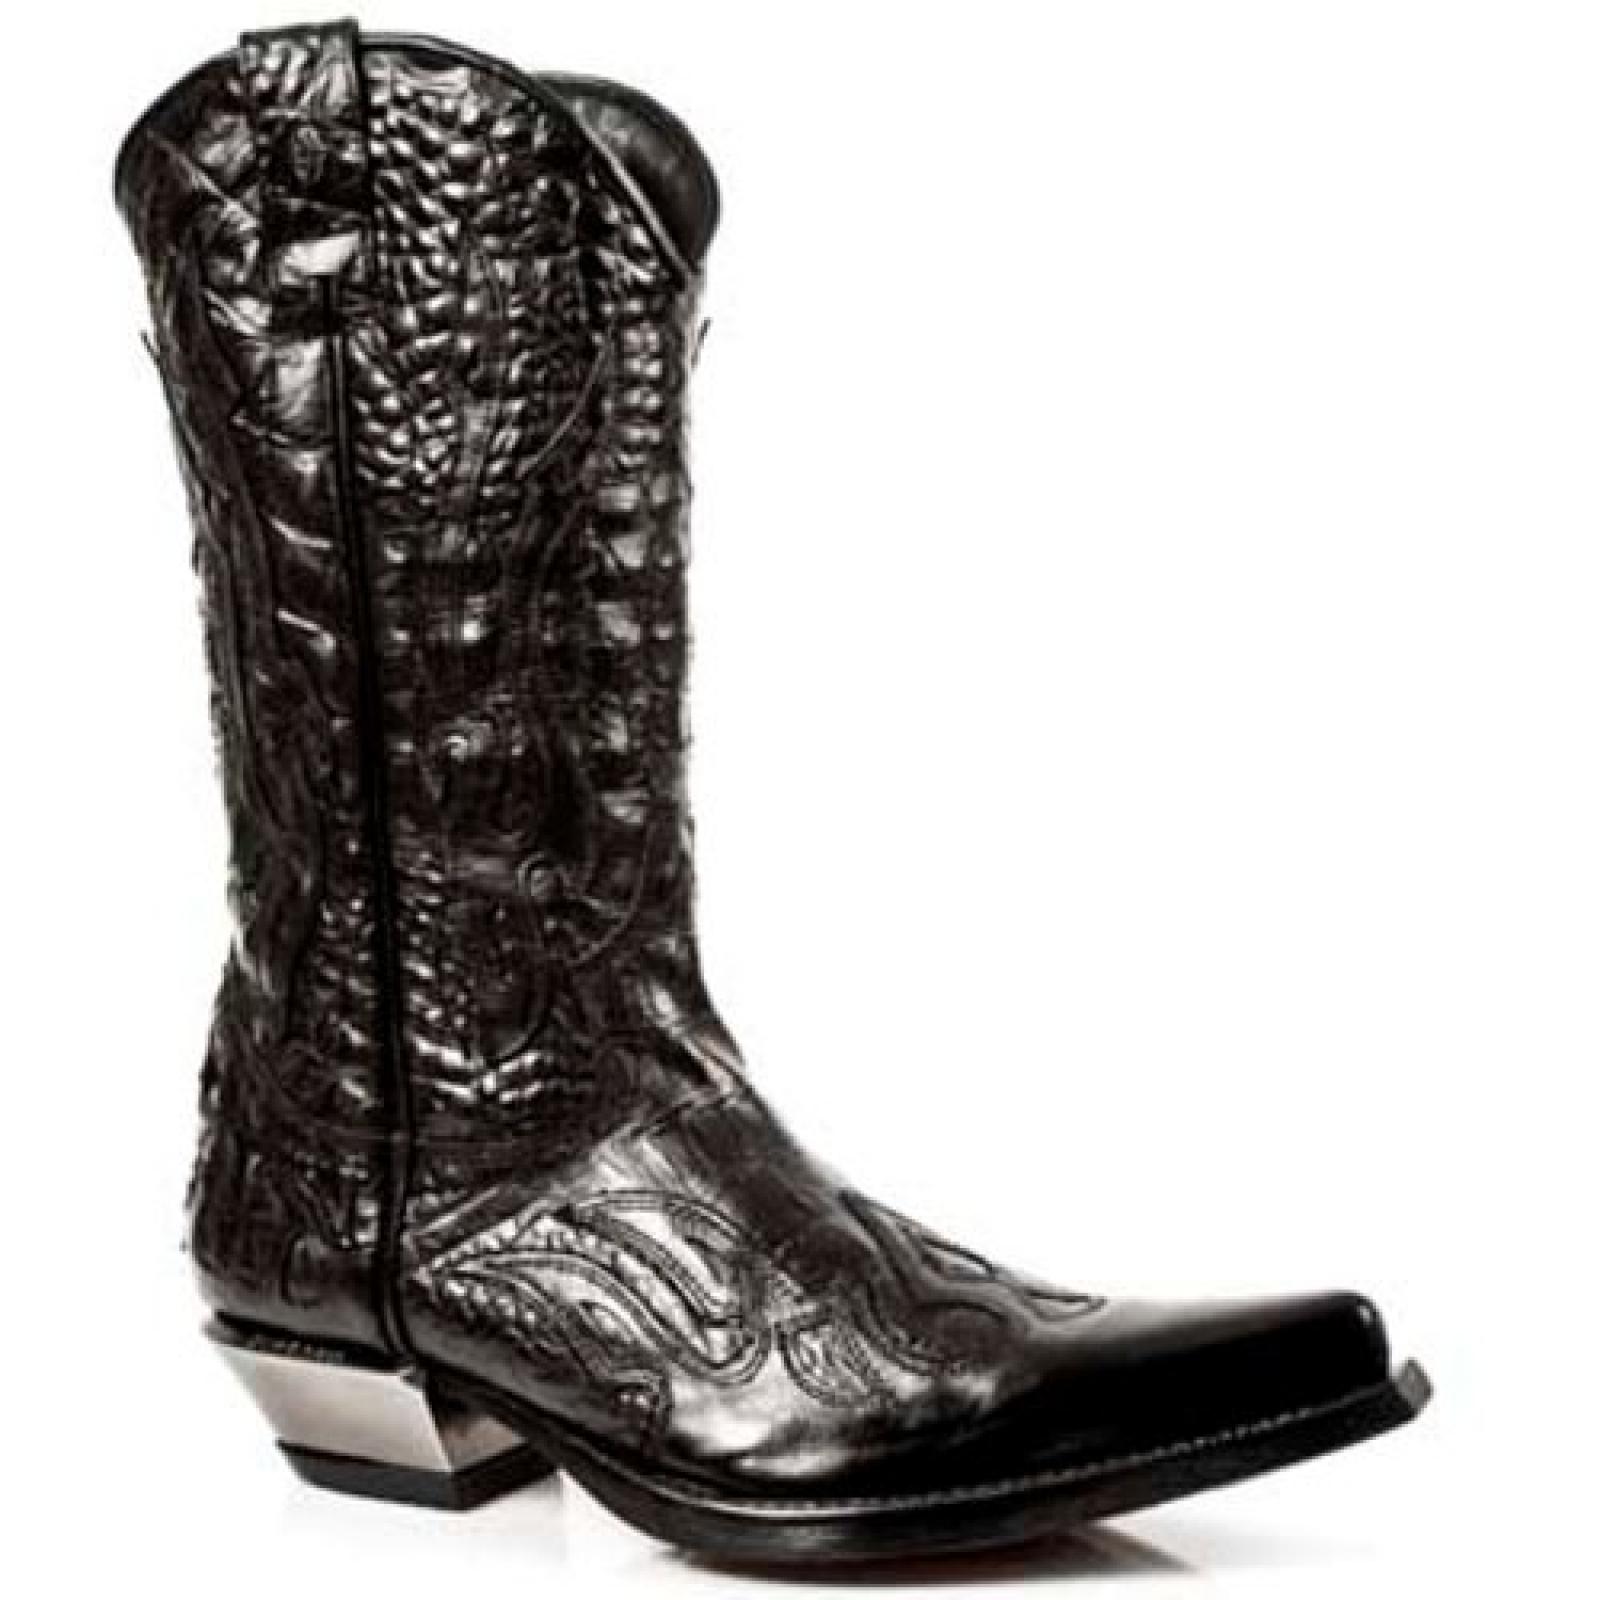 New Rock Boots Herren Stiefel - Style 7921 S1 schwarz 